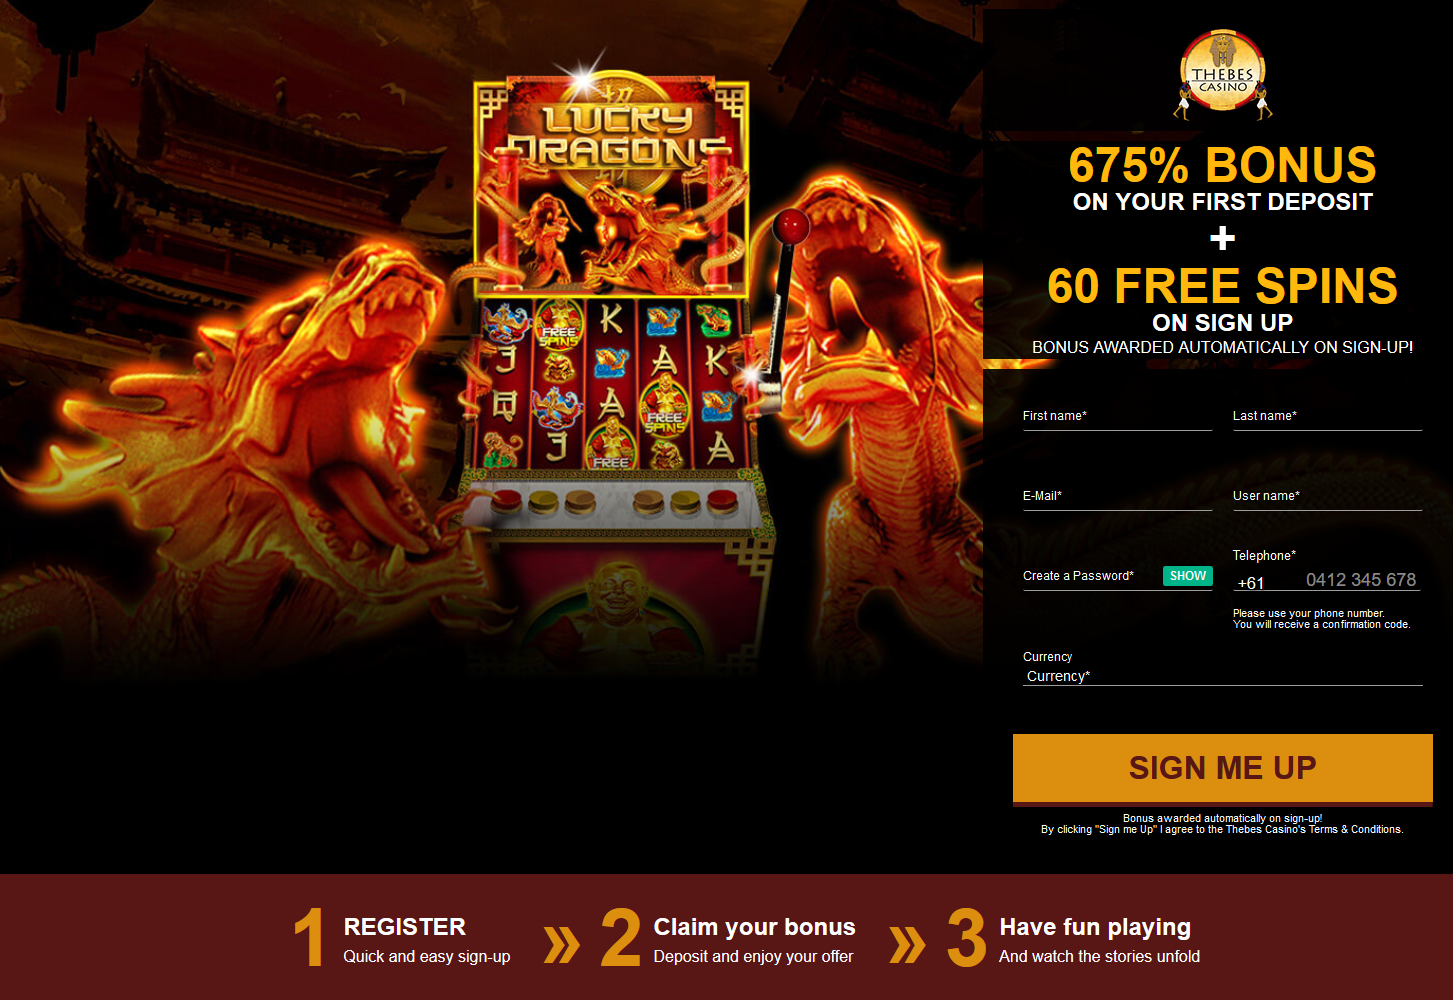 Thebes Casino -Get
                          675% Bonus On Sign Up